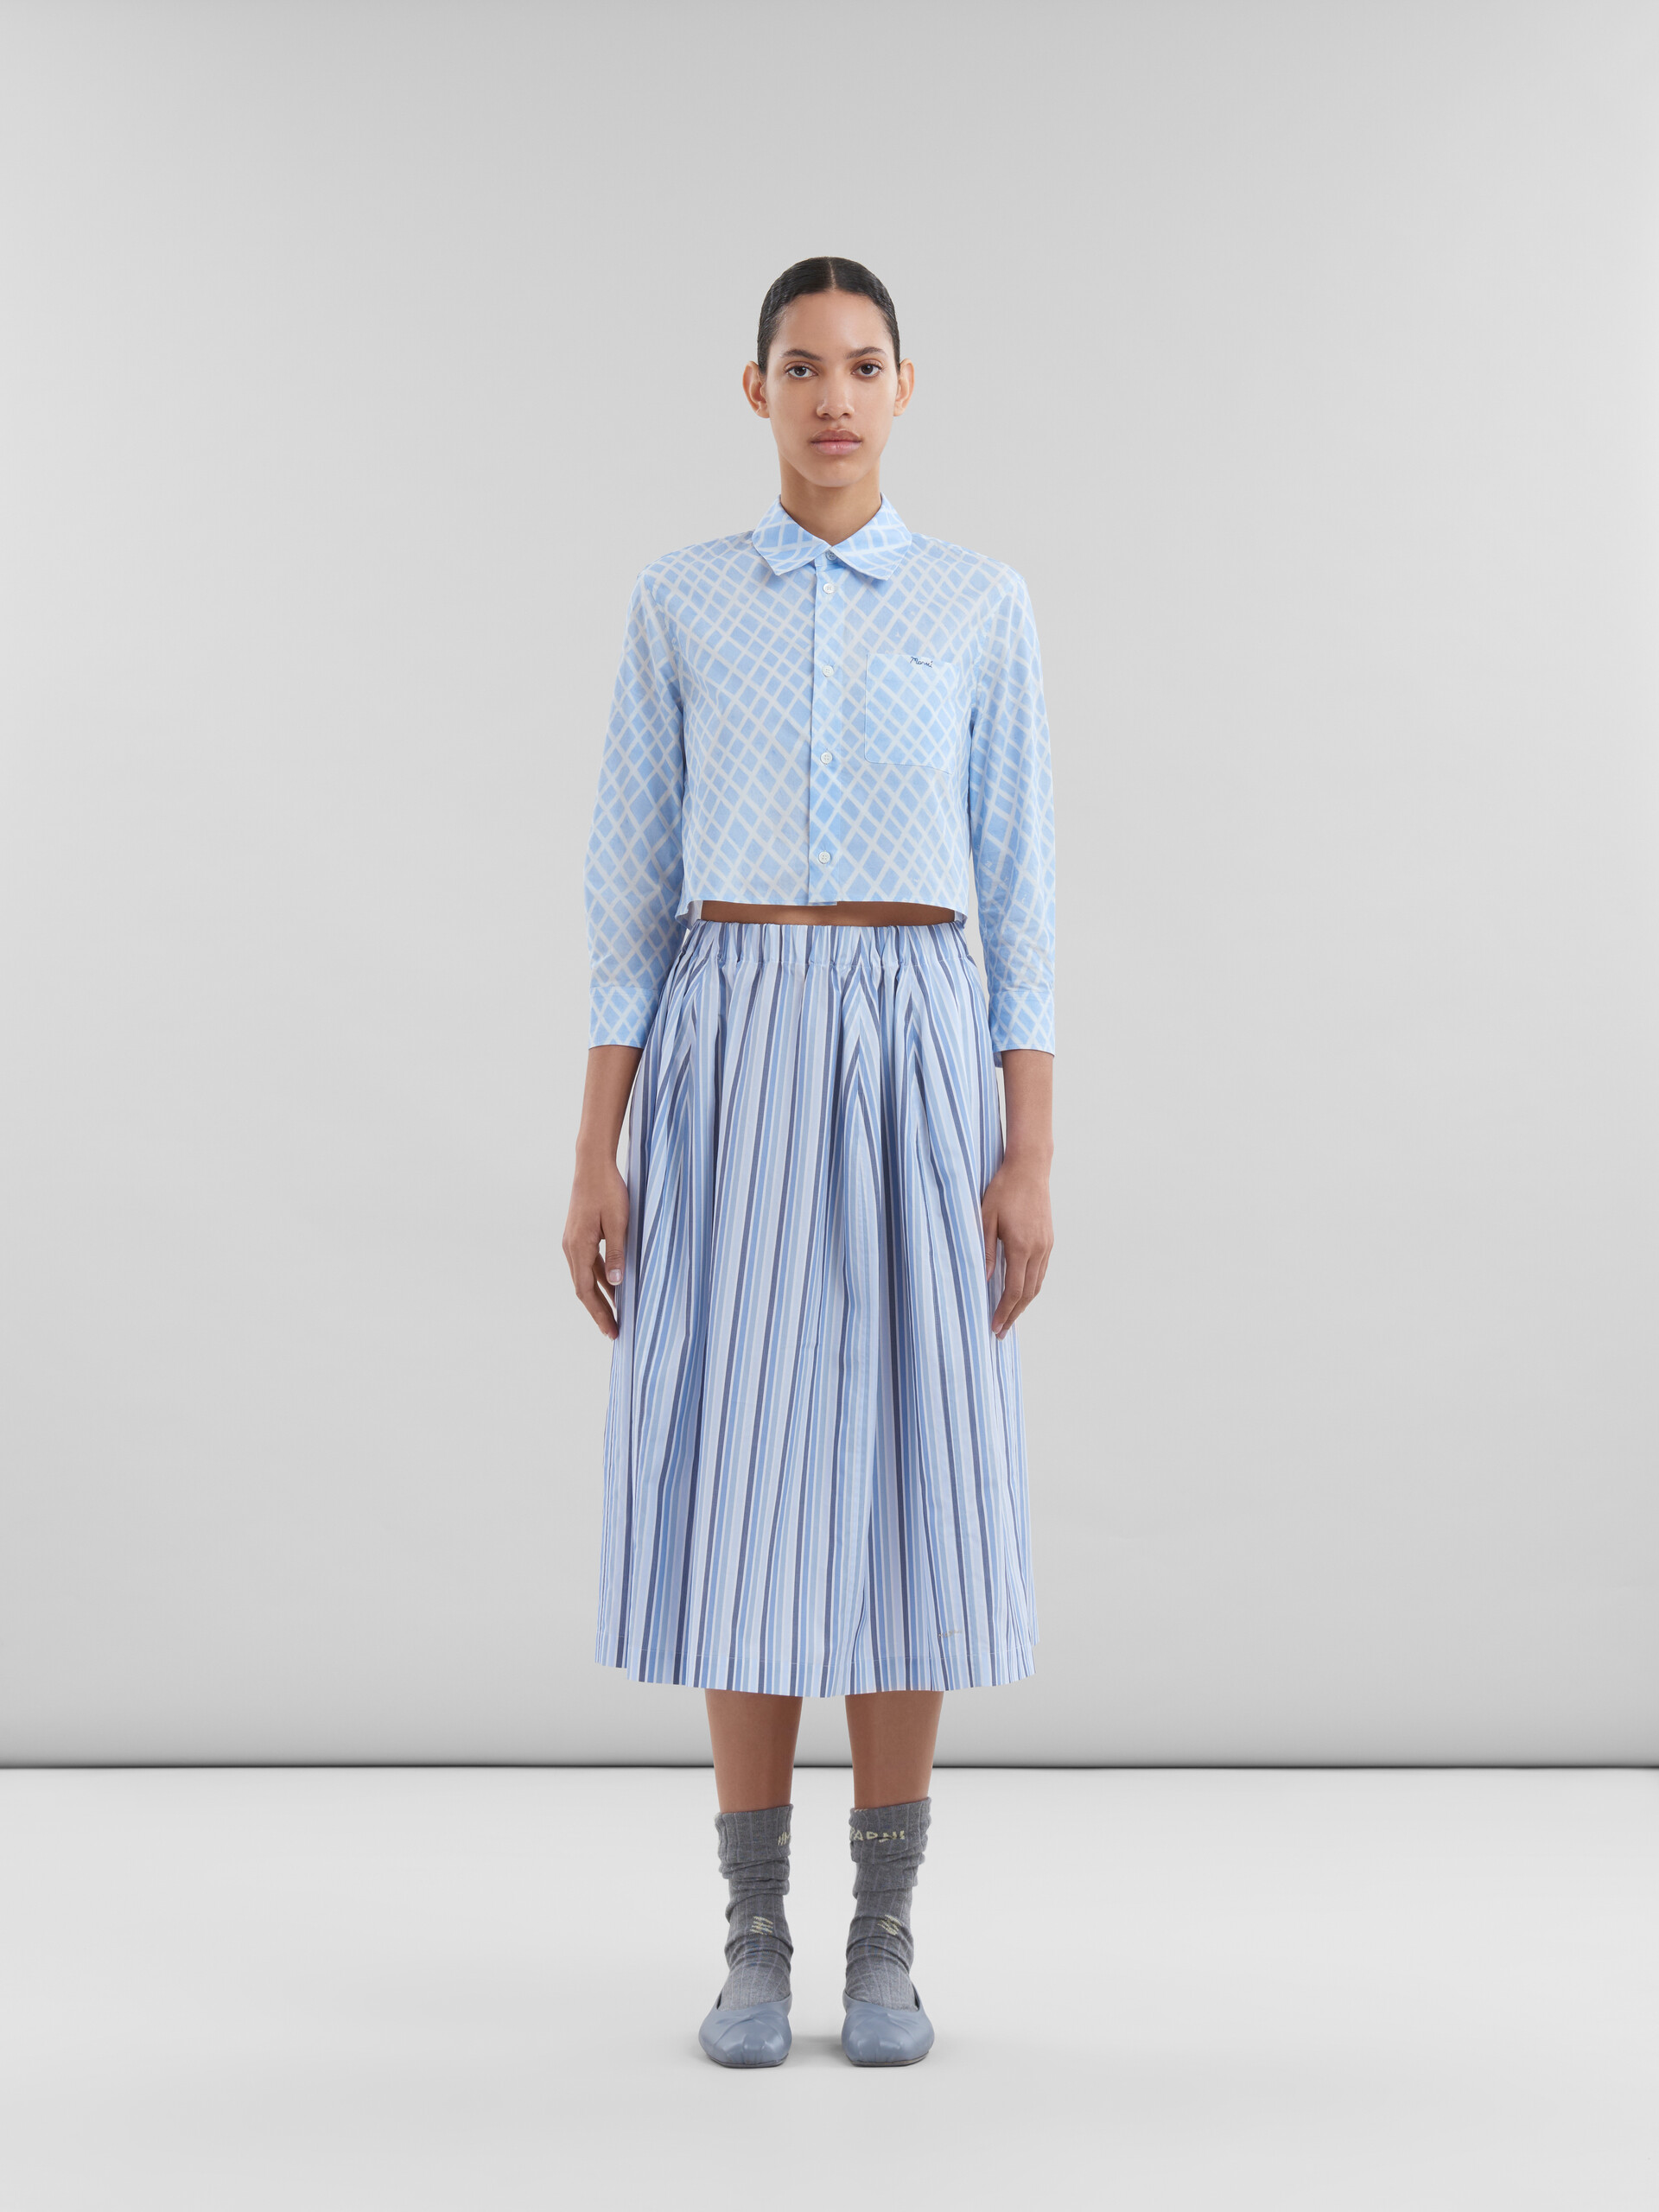 Falda midi elástica azul de popelina orgánica a rayas - Faldas - Image 2